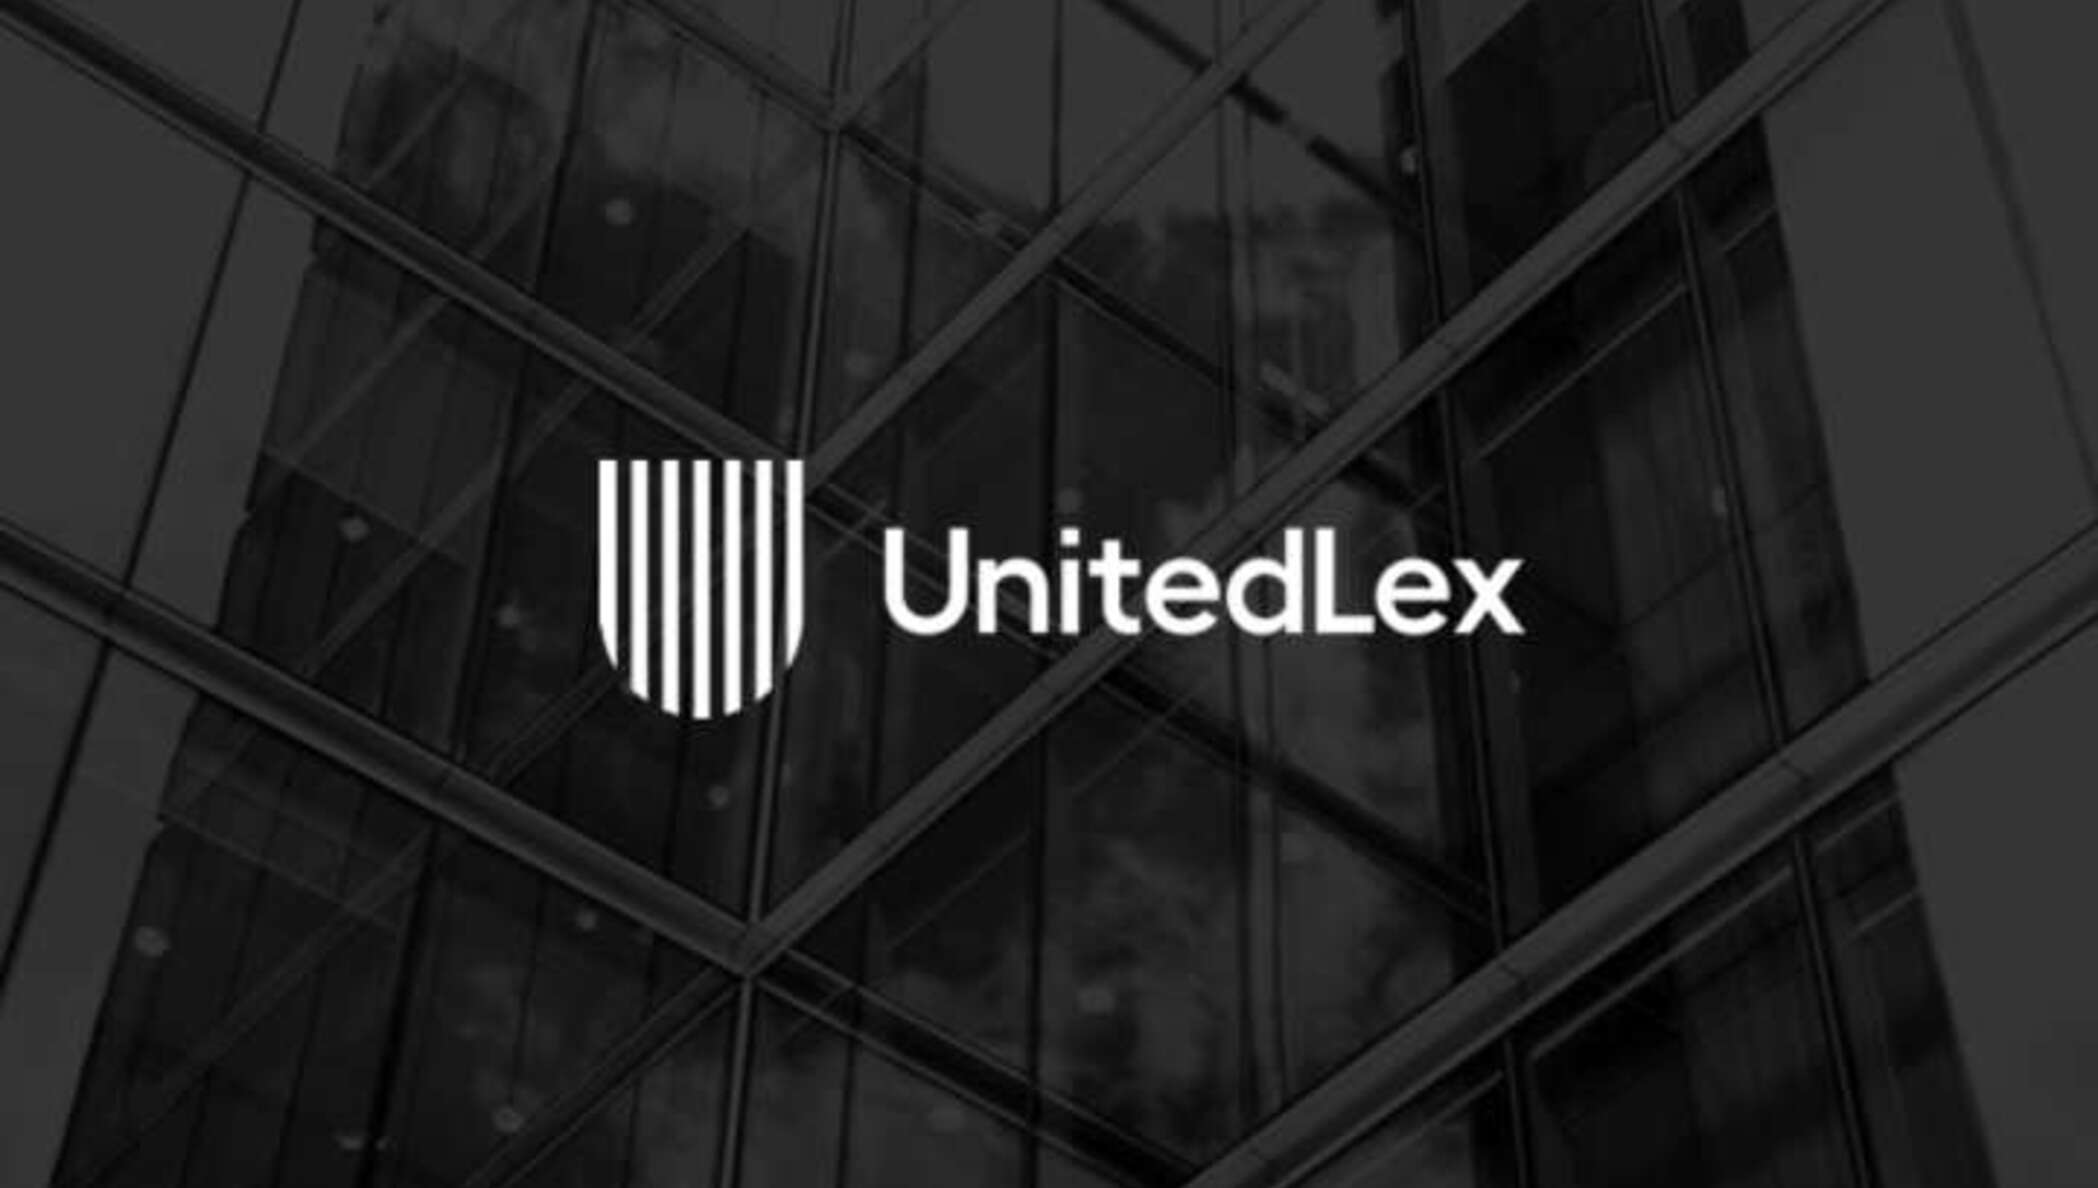 United Lex brand logo